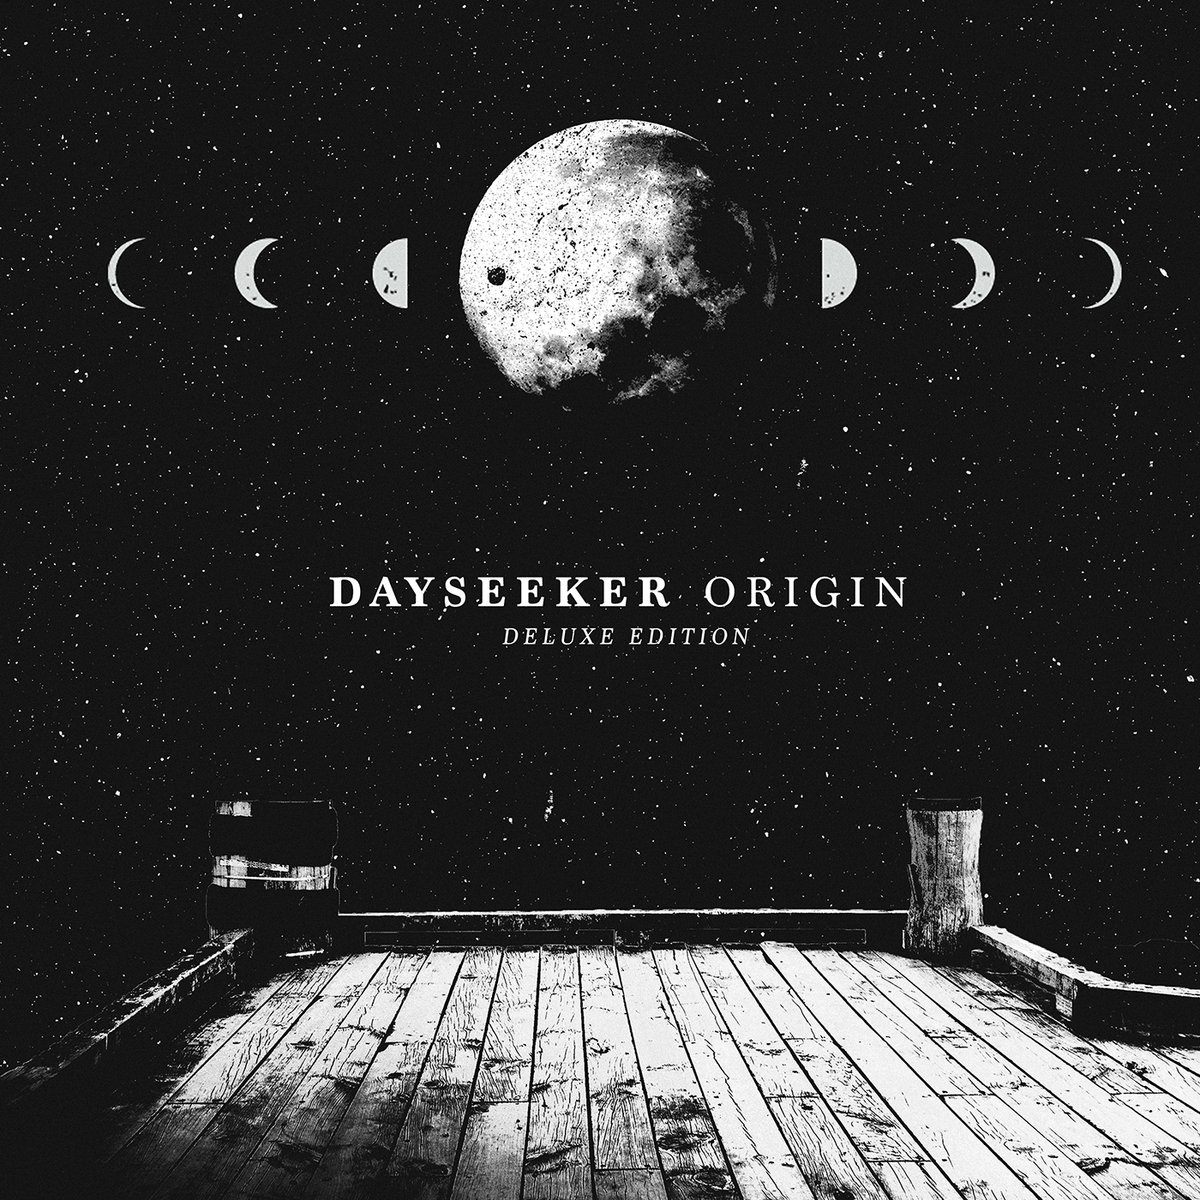 Origin Deluxe Edition Dayseeker Invogue Records